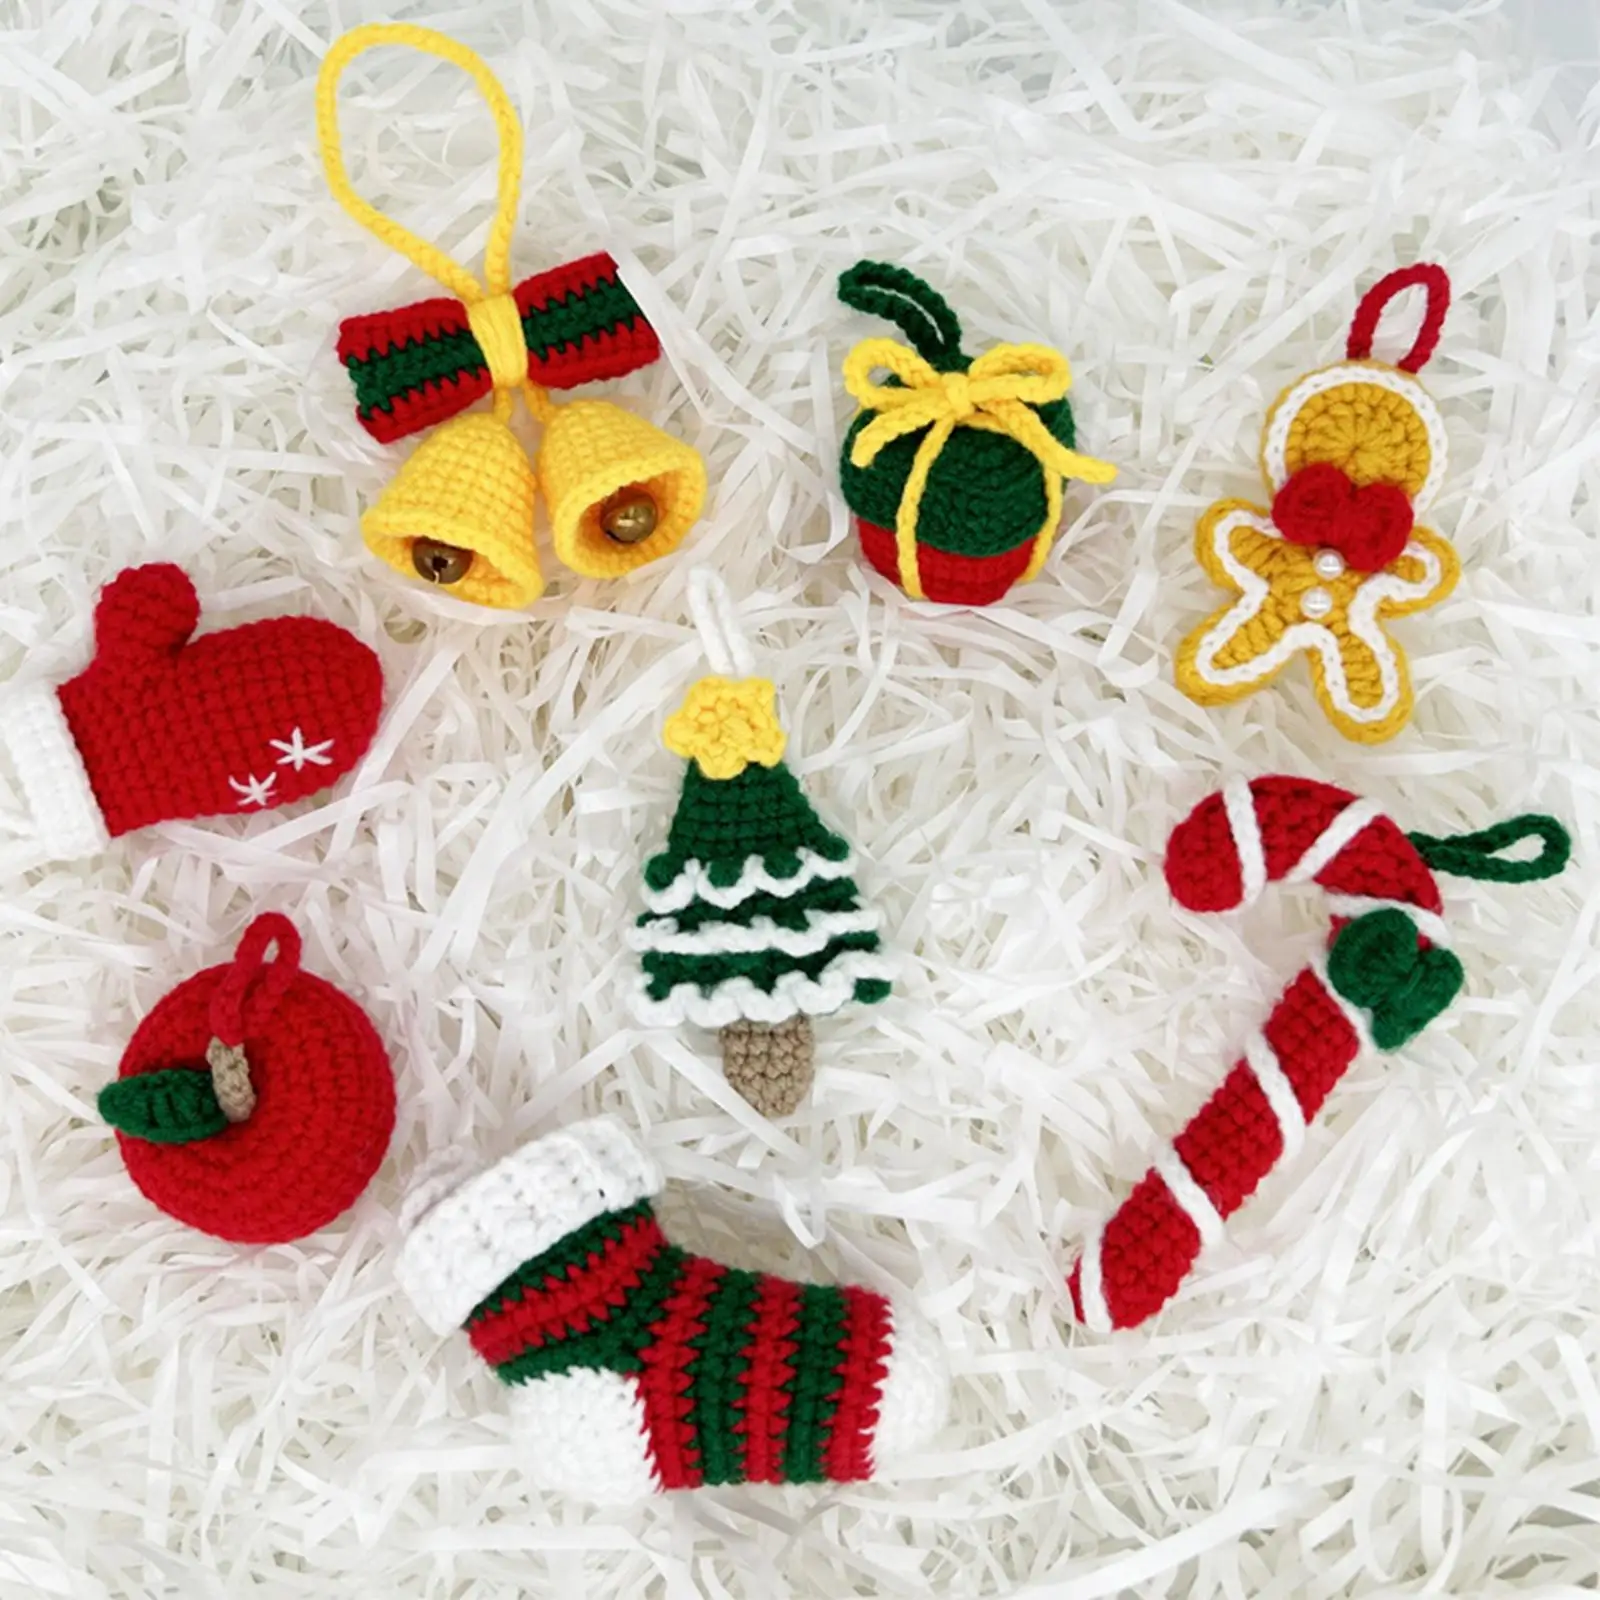 8x Christmas Crochet Kit DIY Crochet Craft Set for Party Favors Christmas